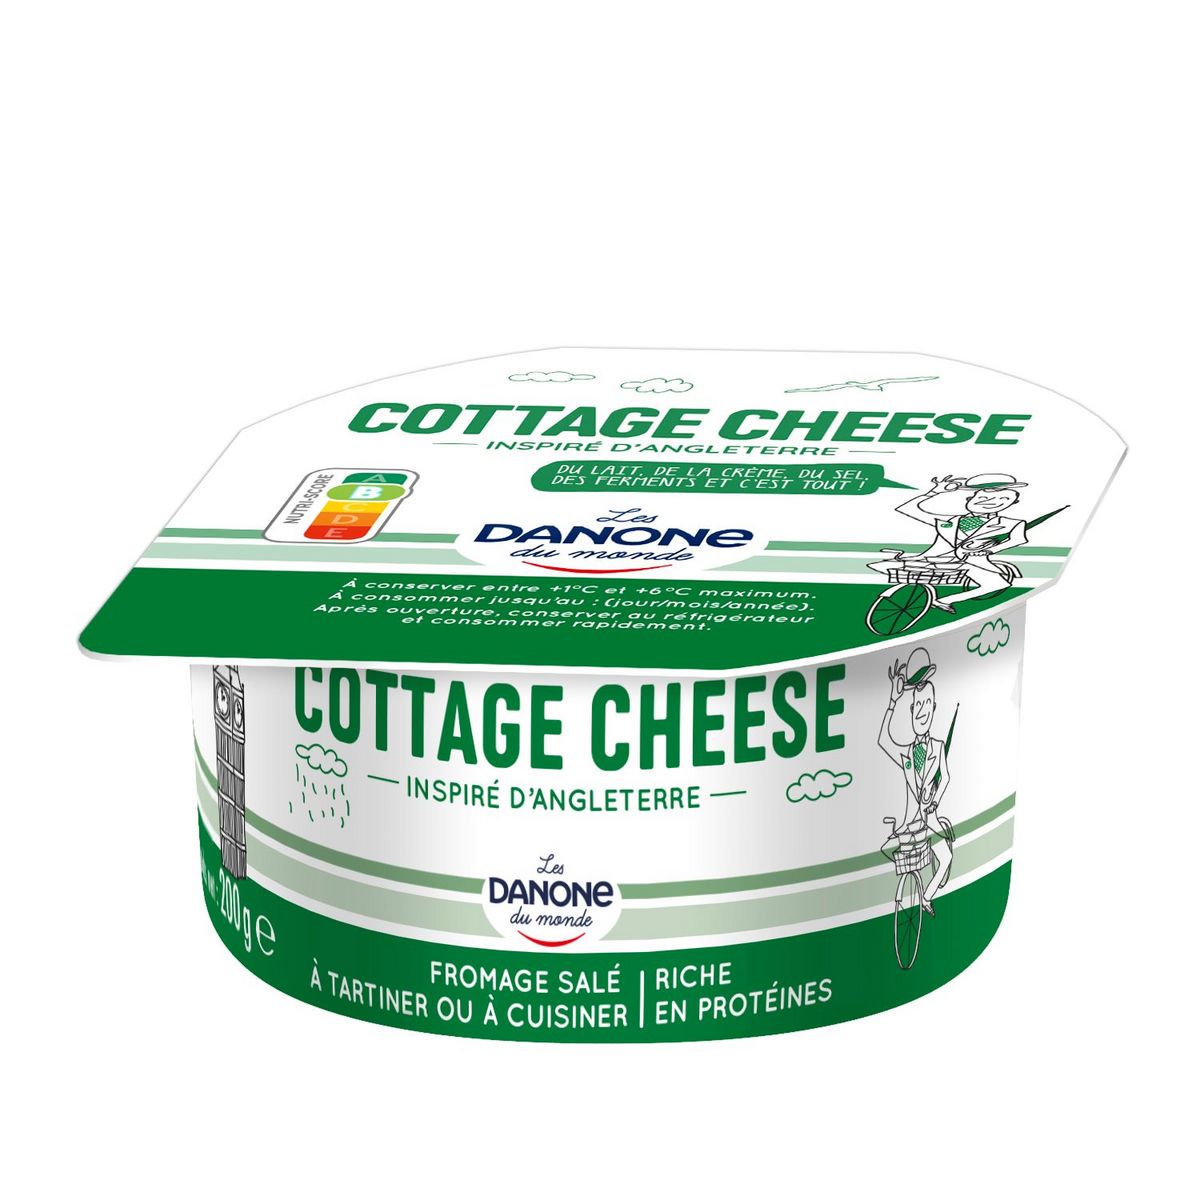 1 Danone Cottage Cheese (200g)